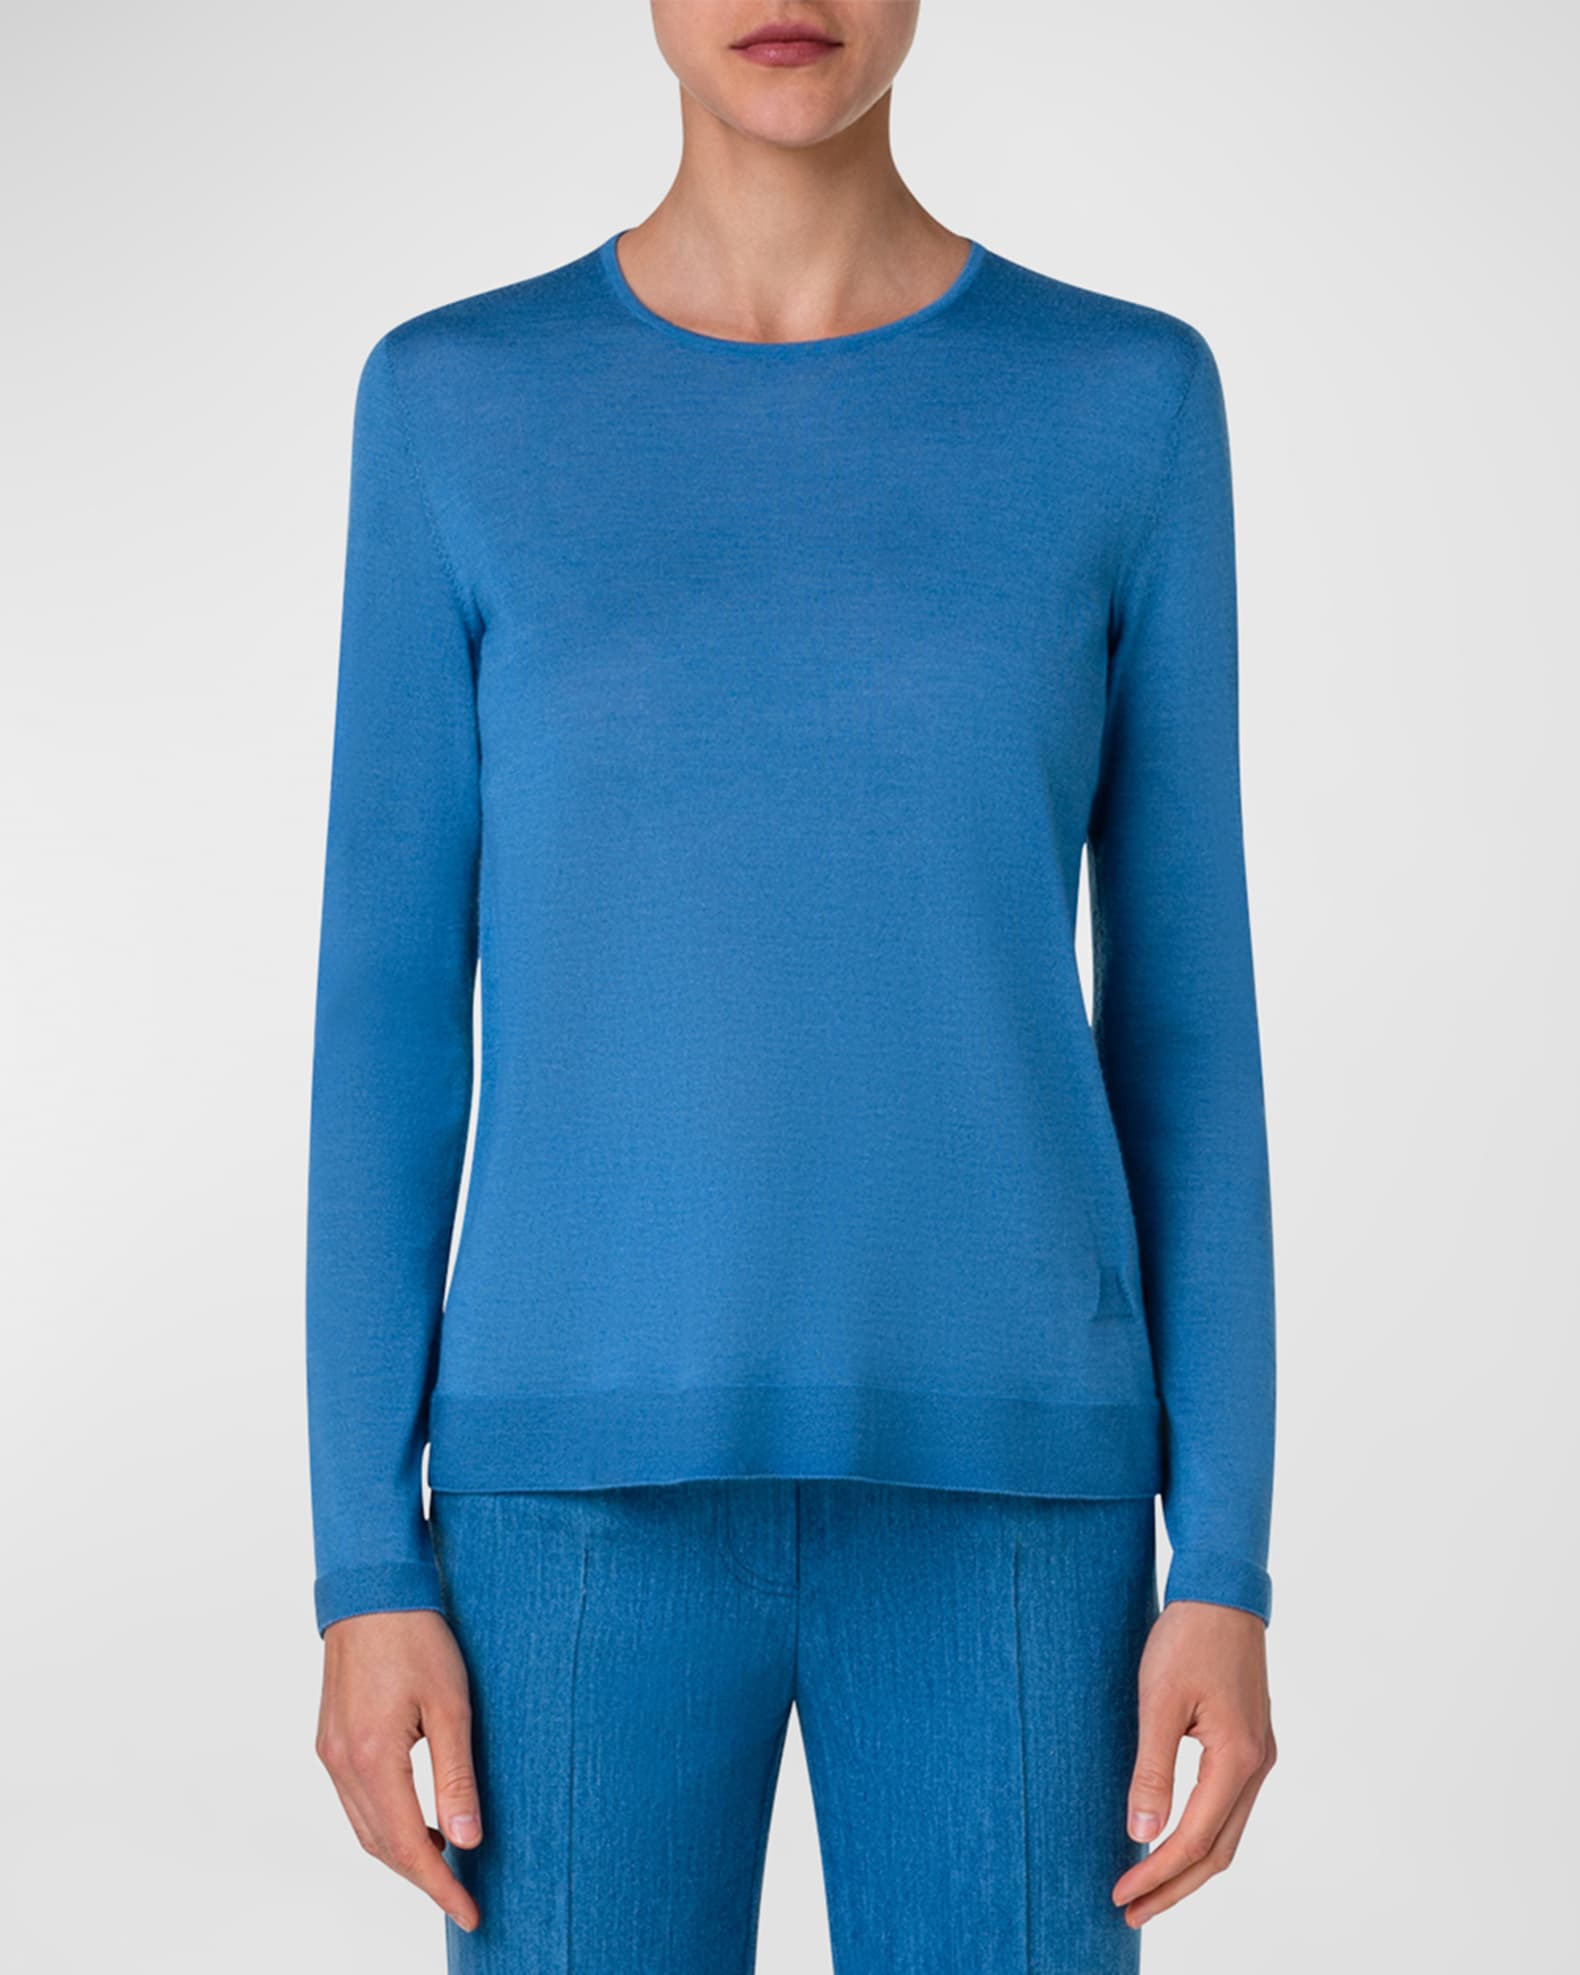 Louis Vuitton Women's Cashmere Silk Striped Knit Sweater